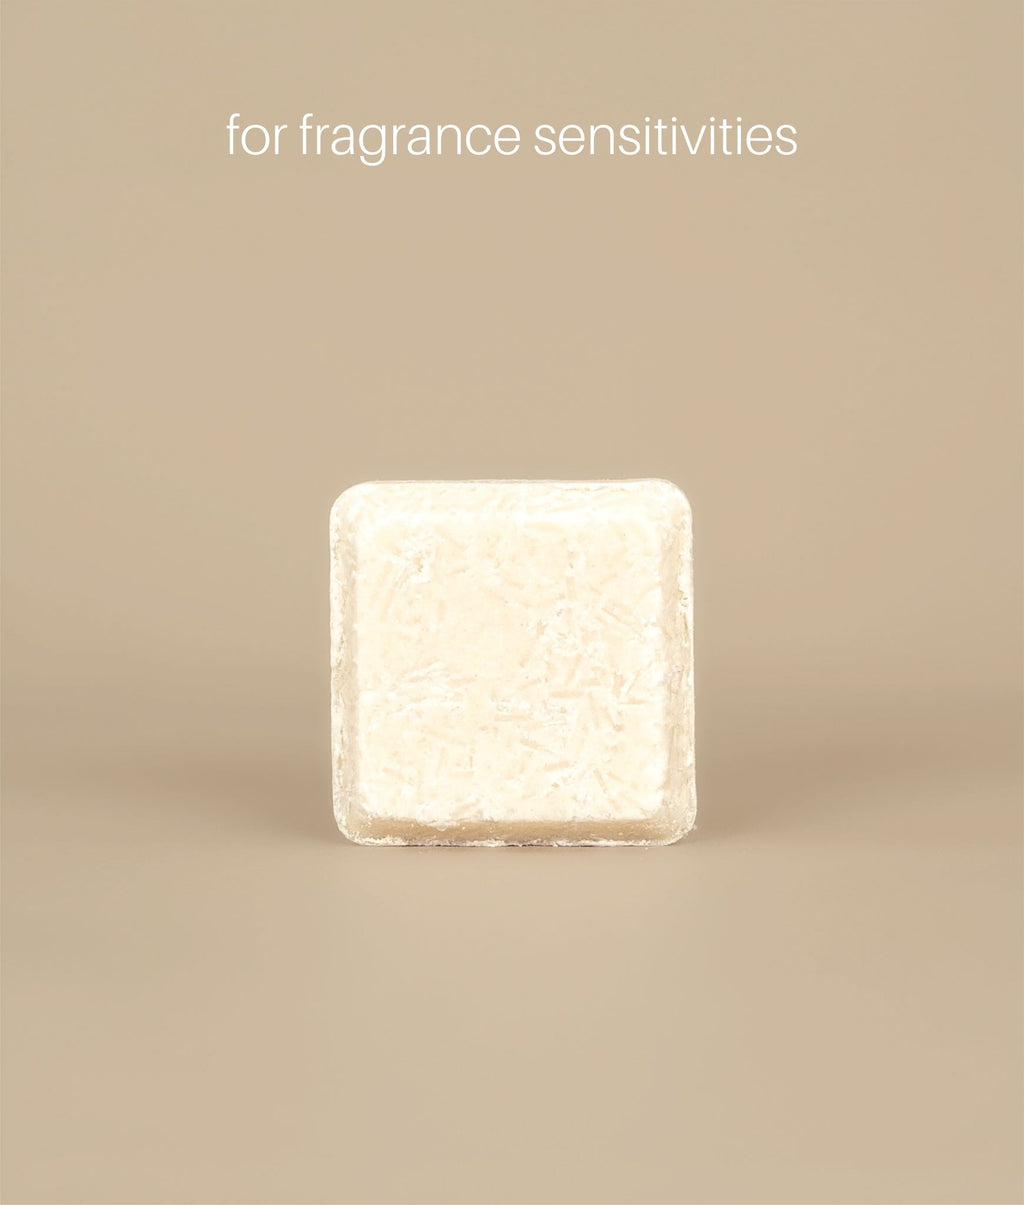 Small square white Unscented suds shampoo bar